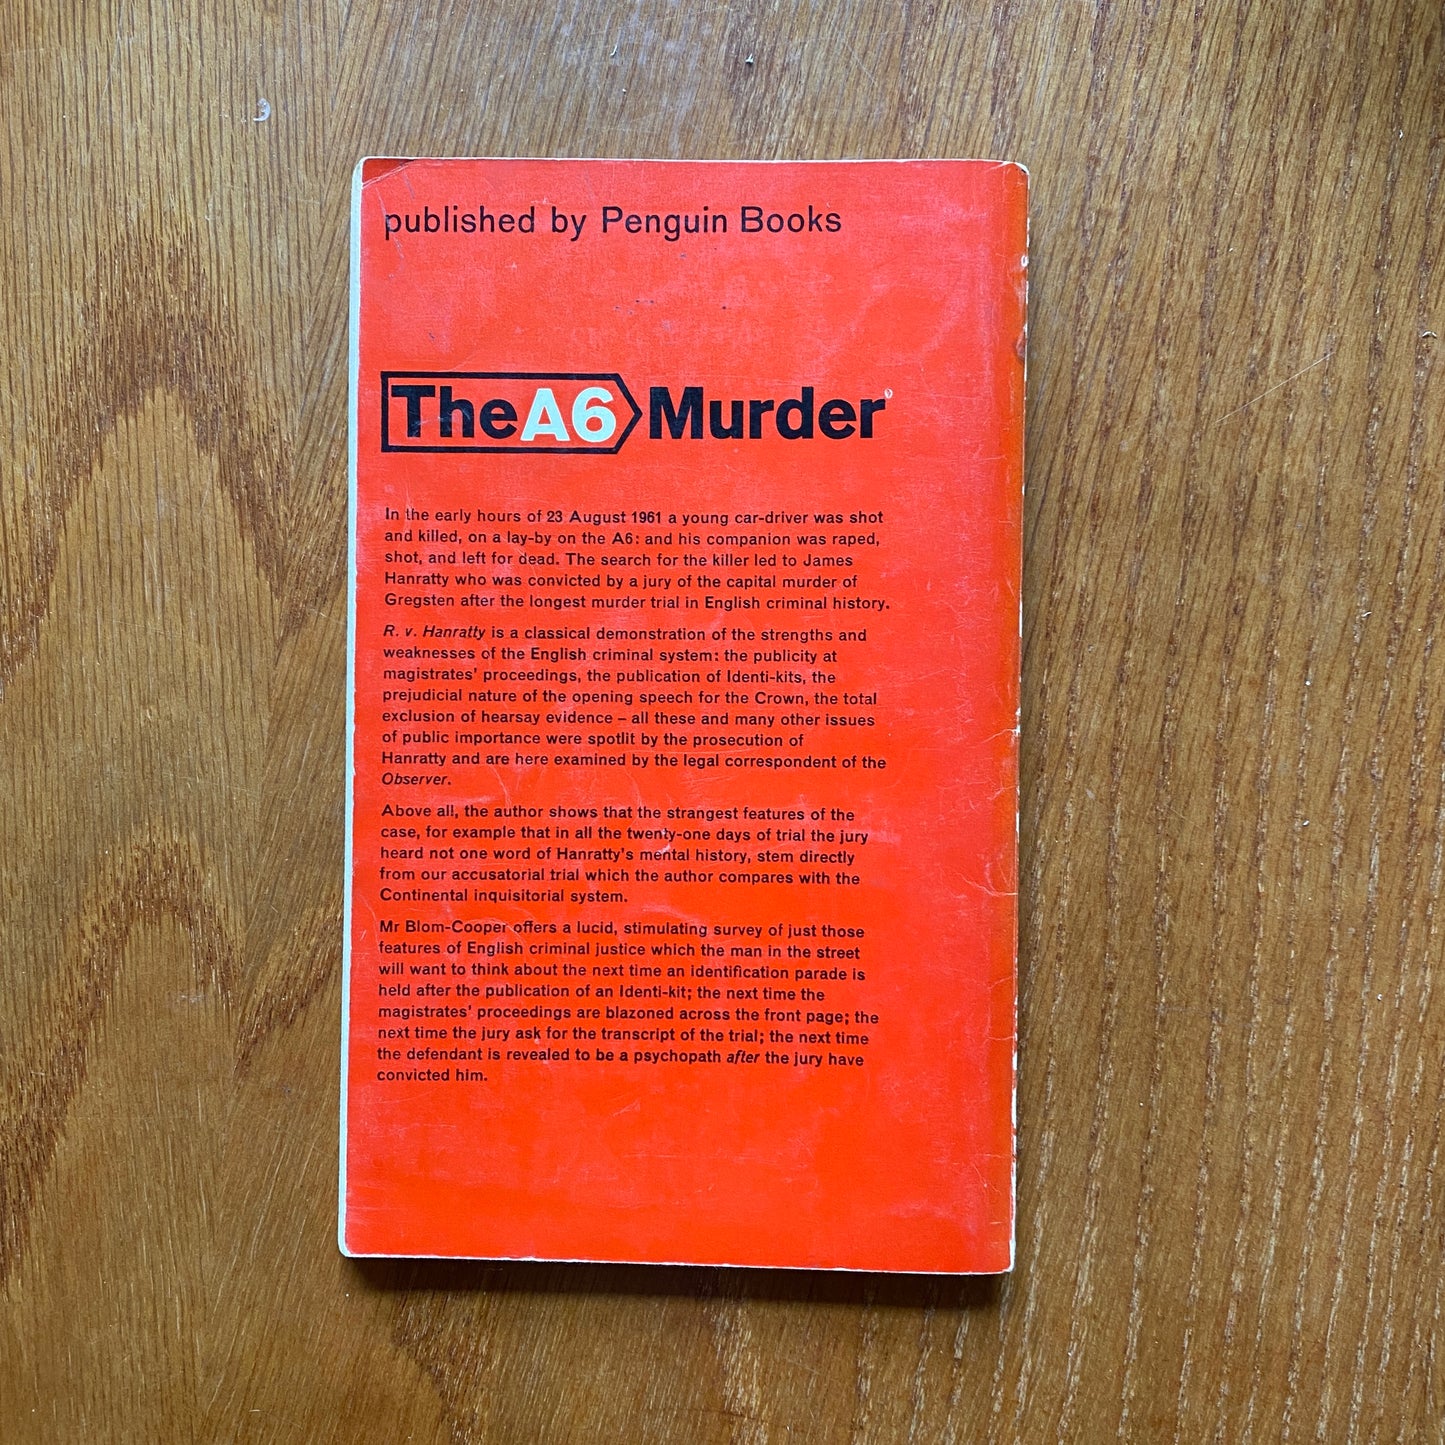 The A6 Murder - Louis Blom-Cooper